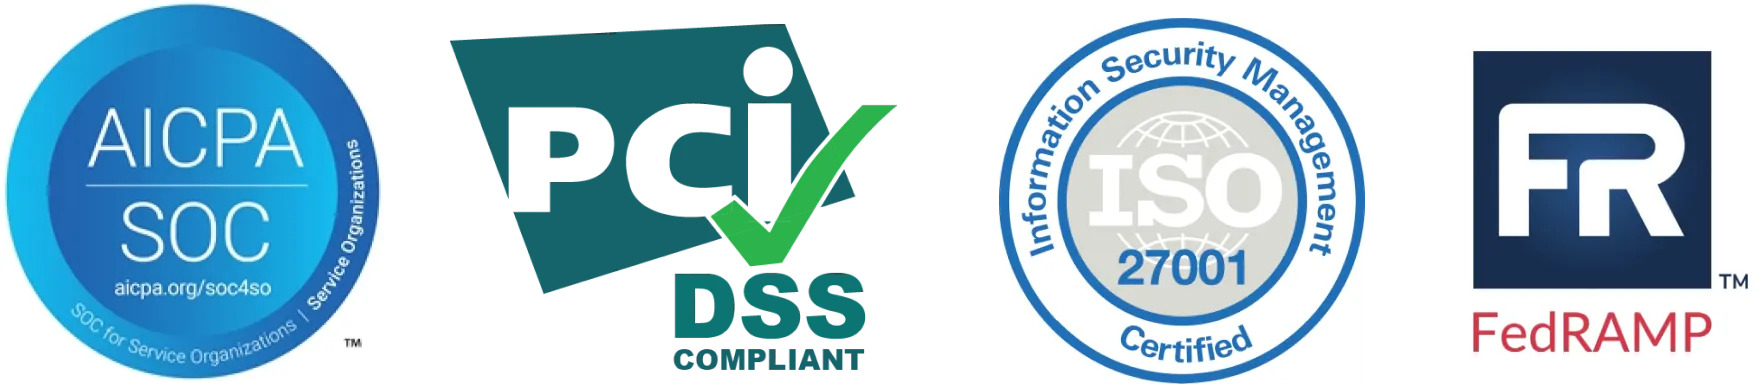 Top 4 compliance certifications